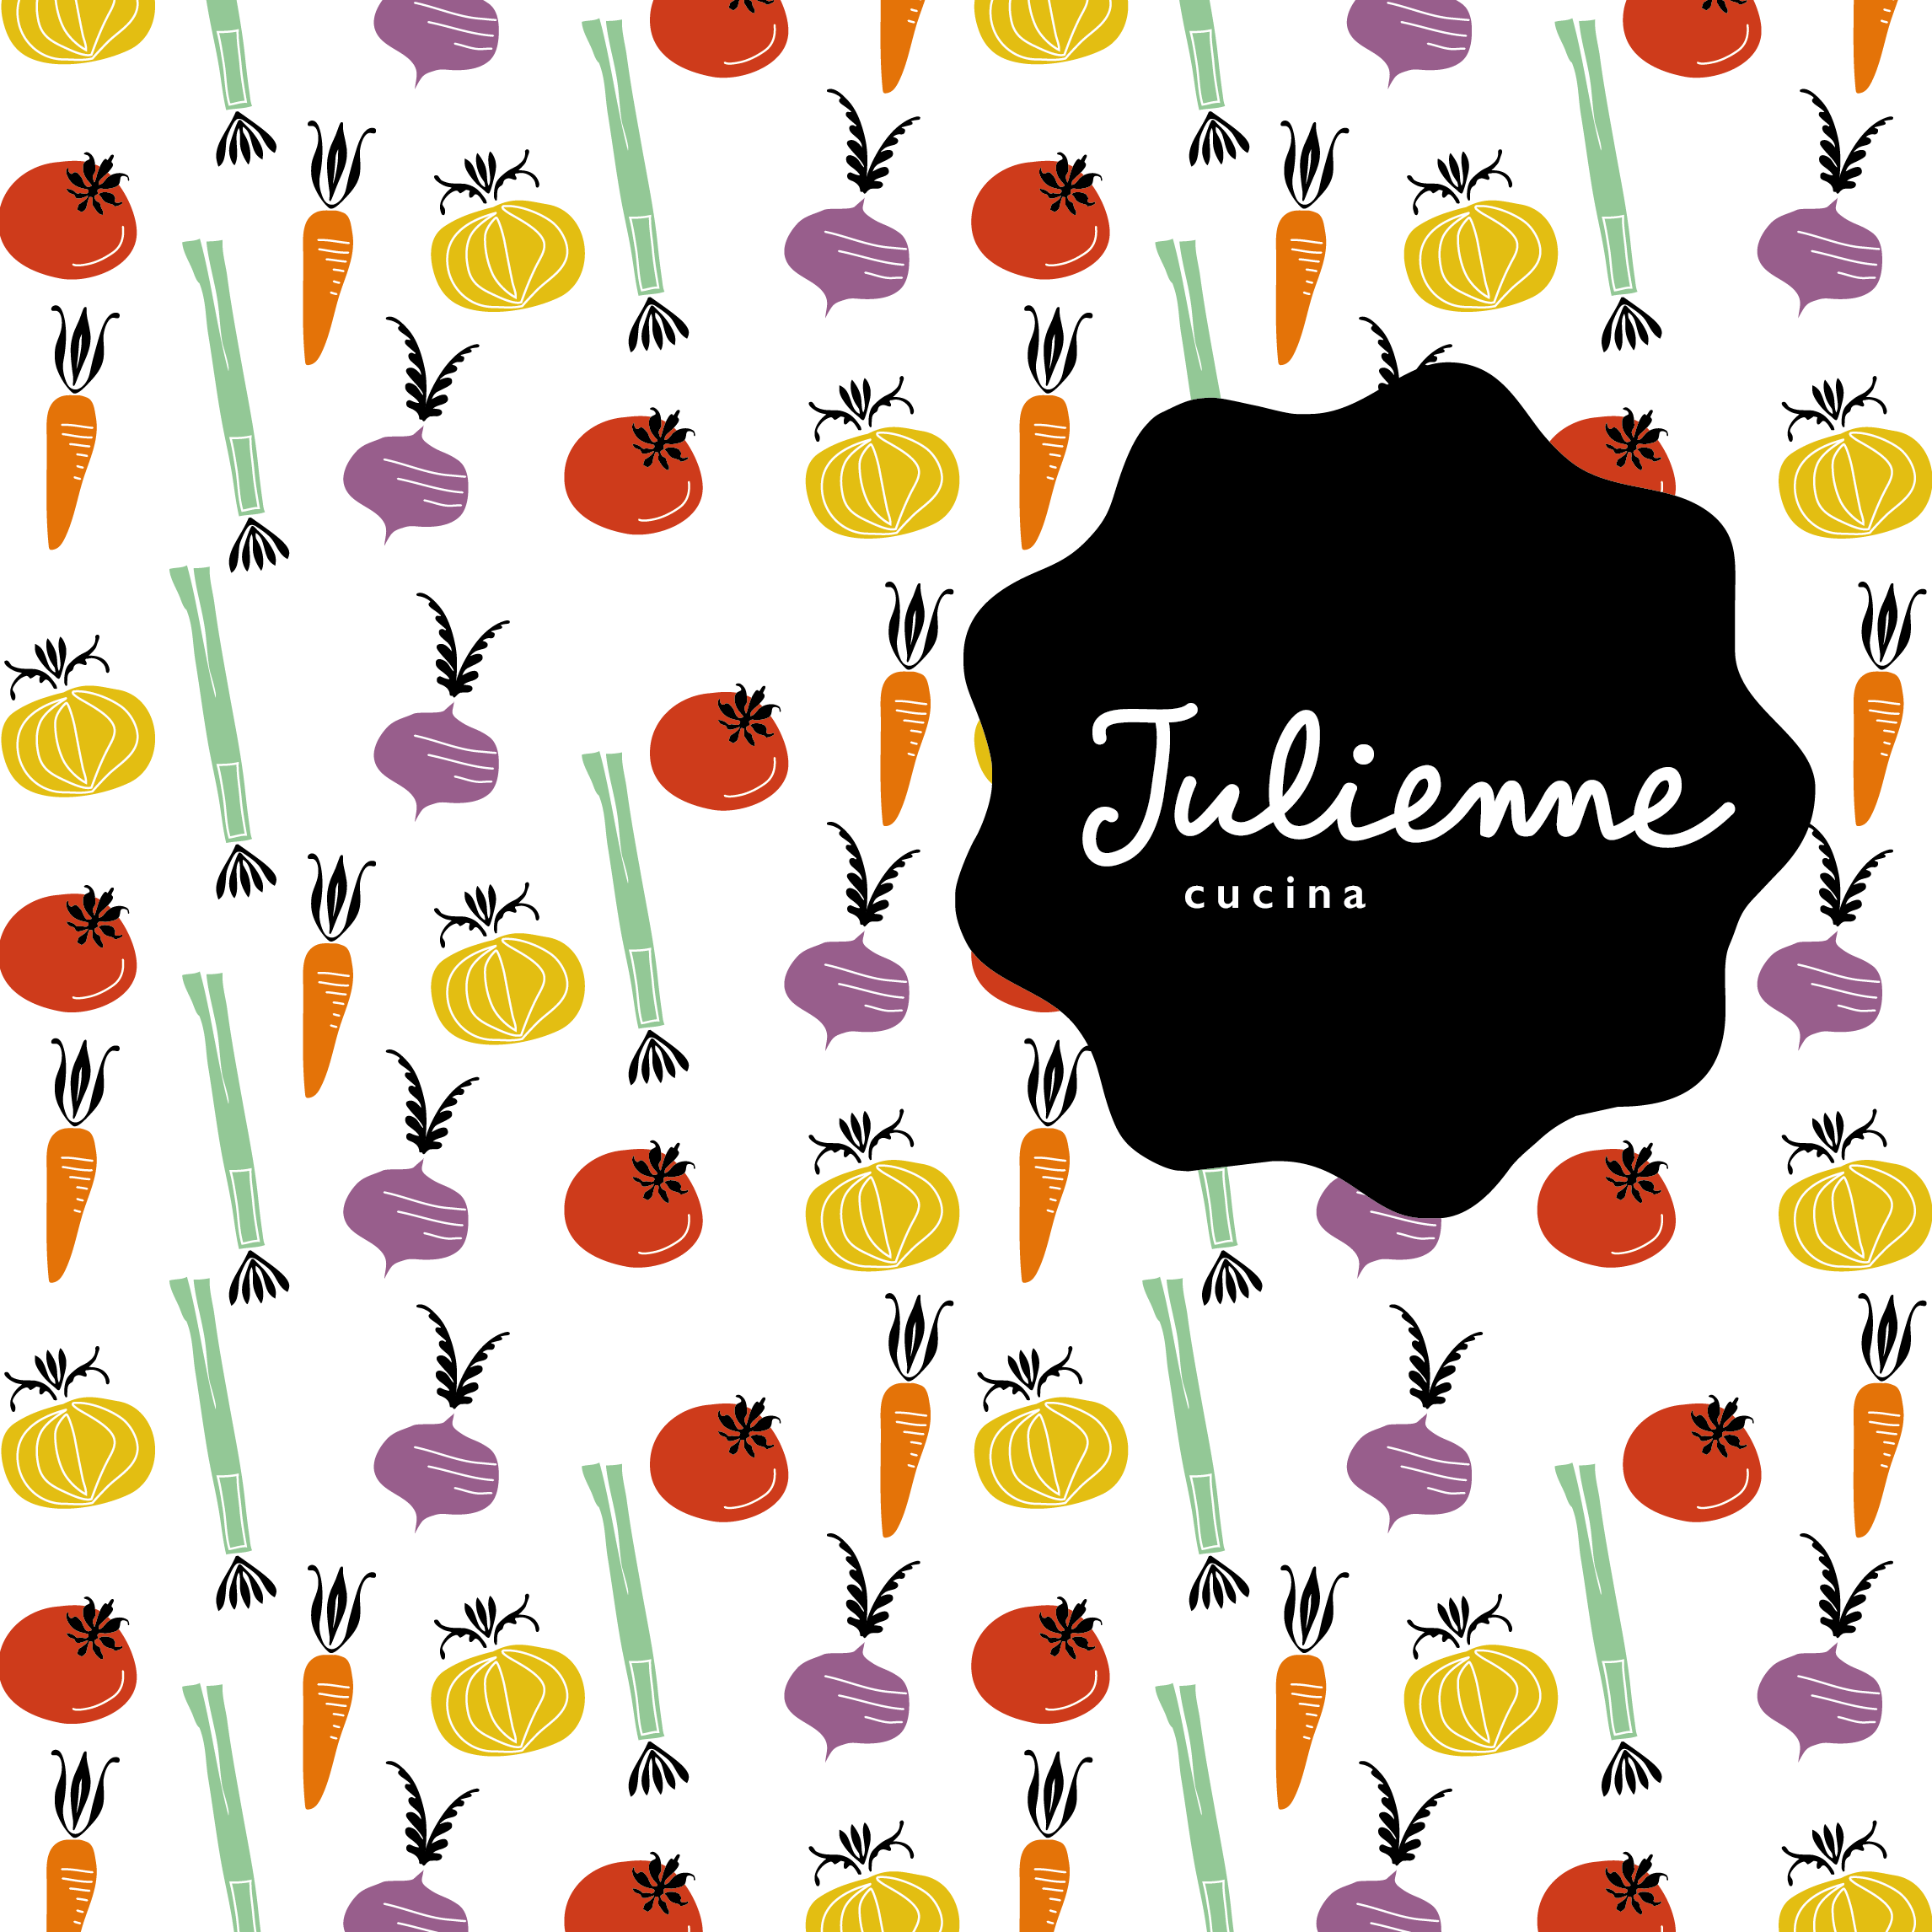 Julienne cucina format grafico - Studio Talpa